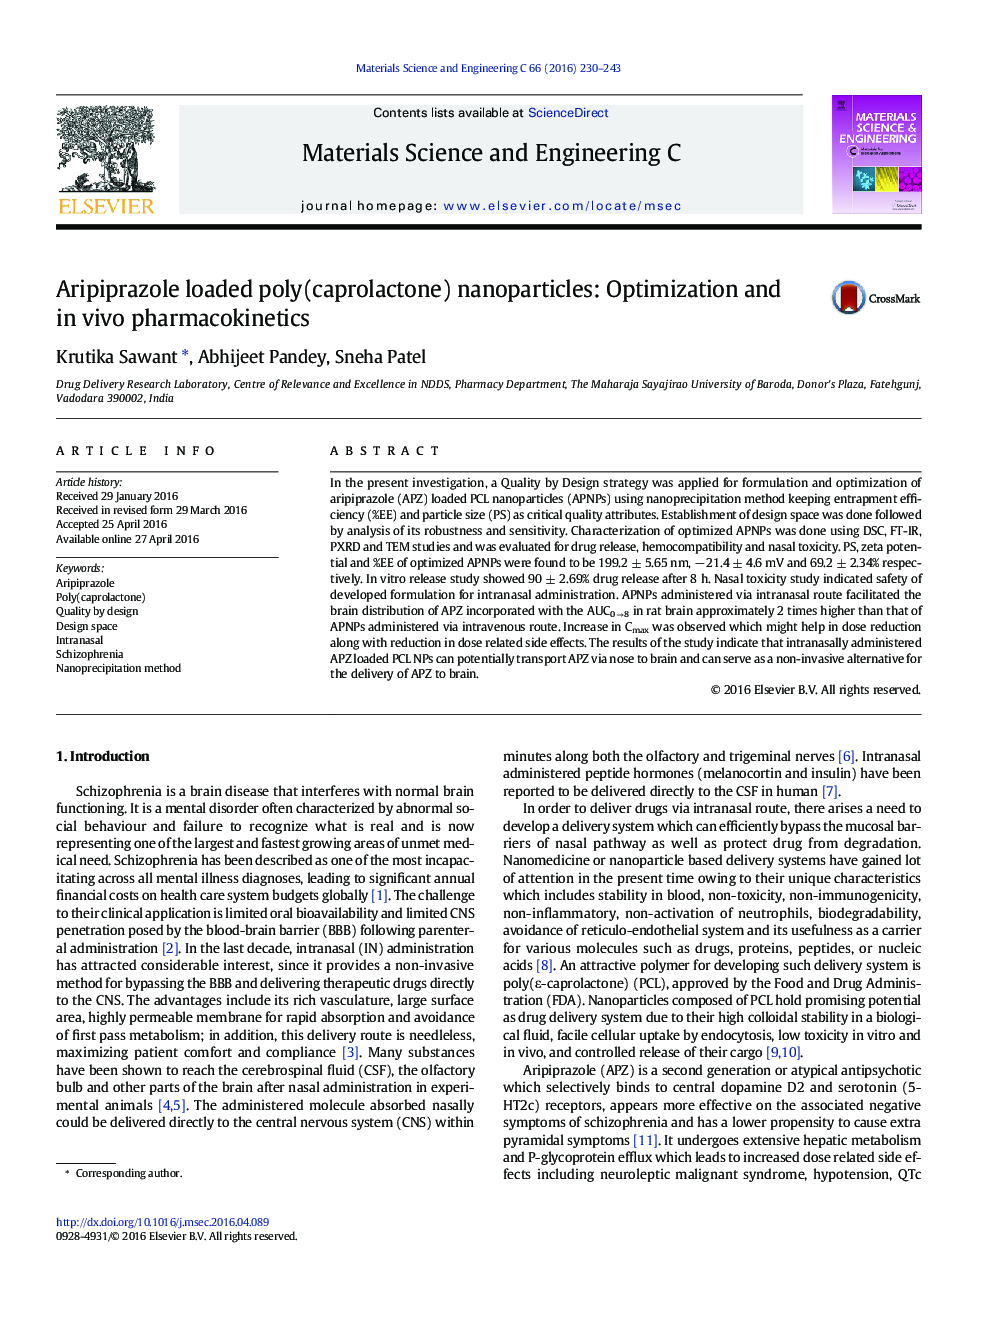 Aripiprazole loaded poly(caprolactone) nanoparticles: Optimization and in vivo pharmacokinetics